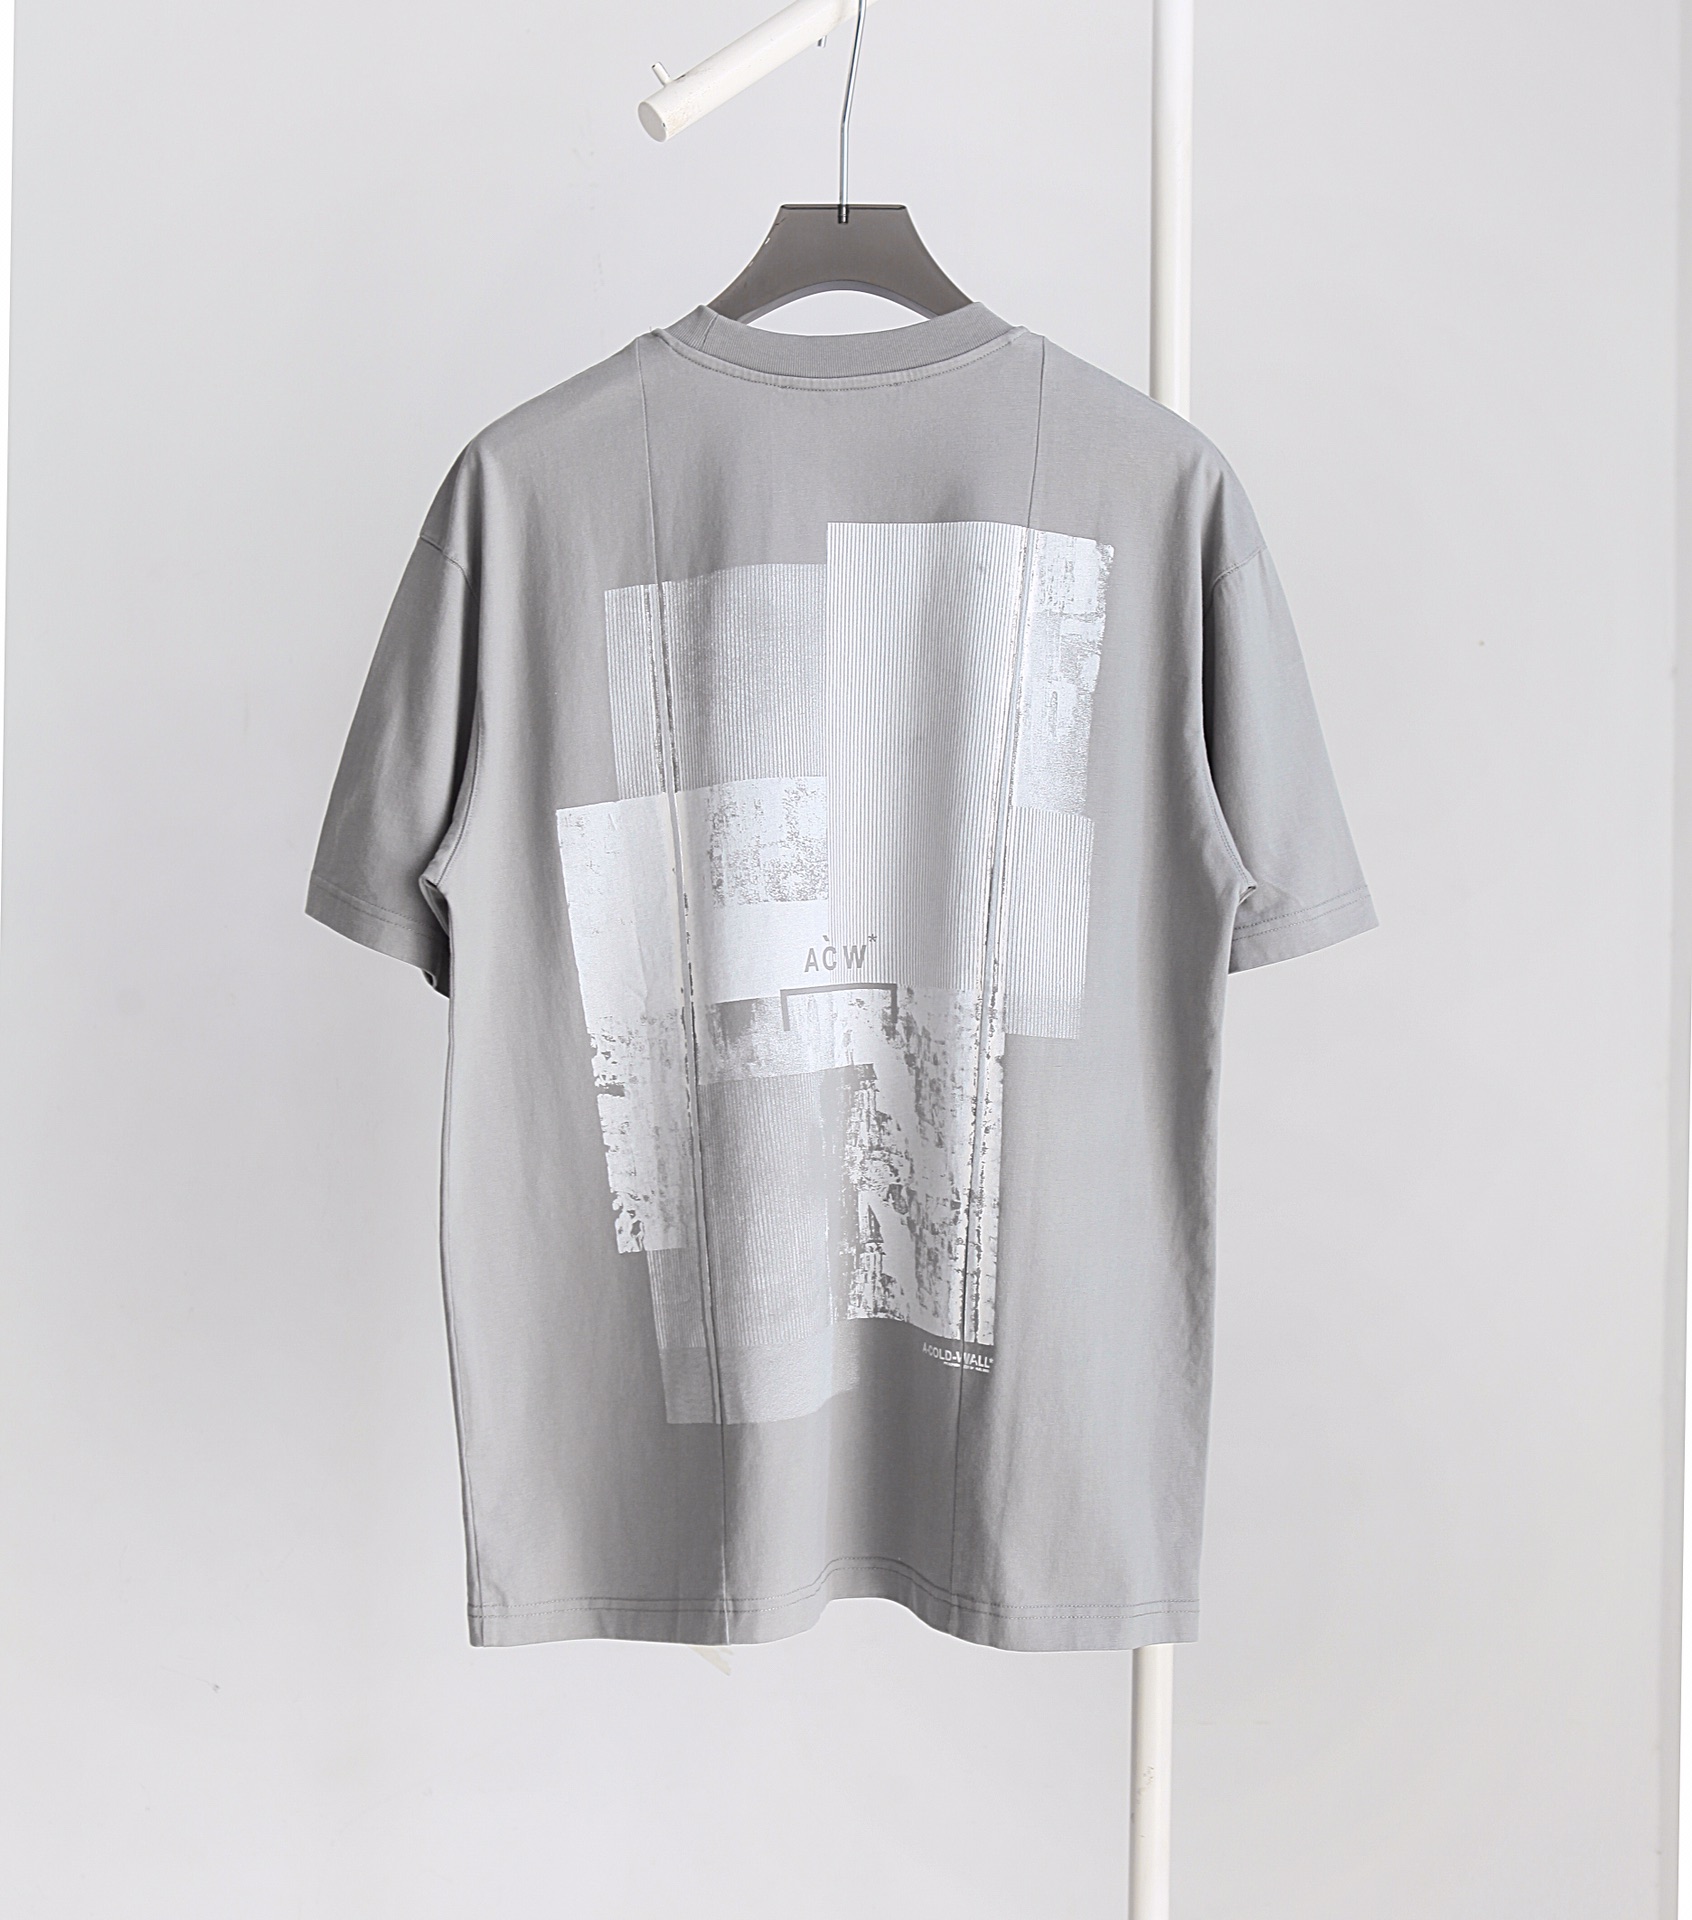 ACOLDWALL ア・コールド・ウォール激安通販 トップス 短袖Tシャツ 純綿 シンプル ロゴプリント 2色可選 グレイ_2